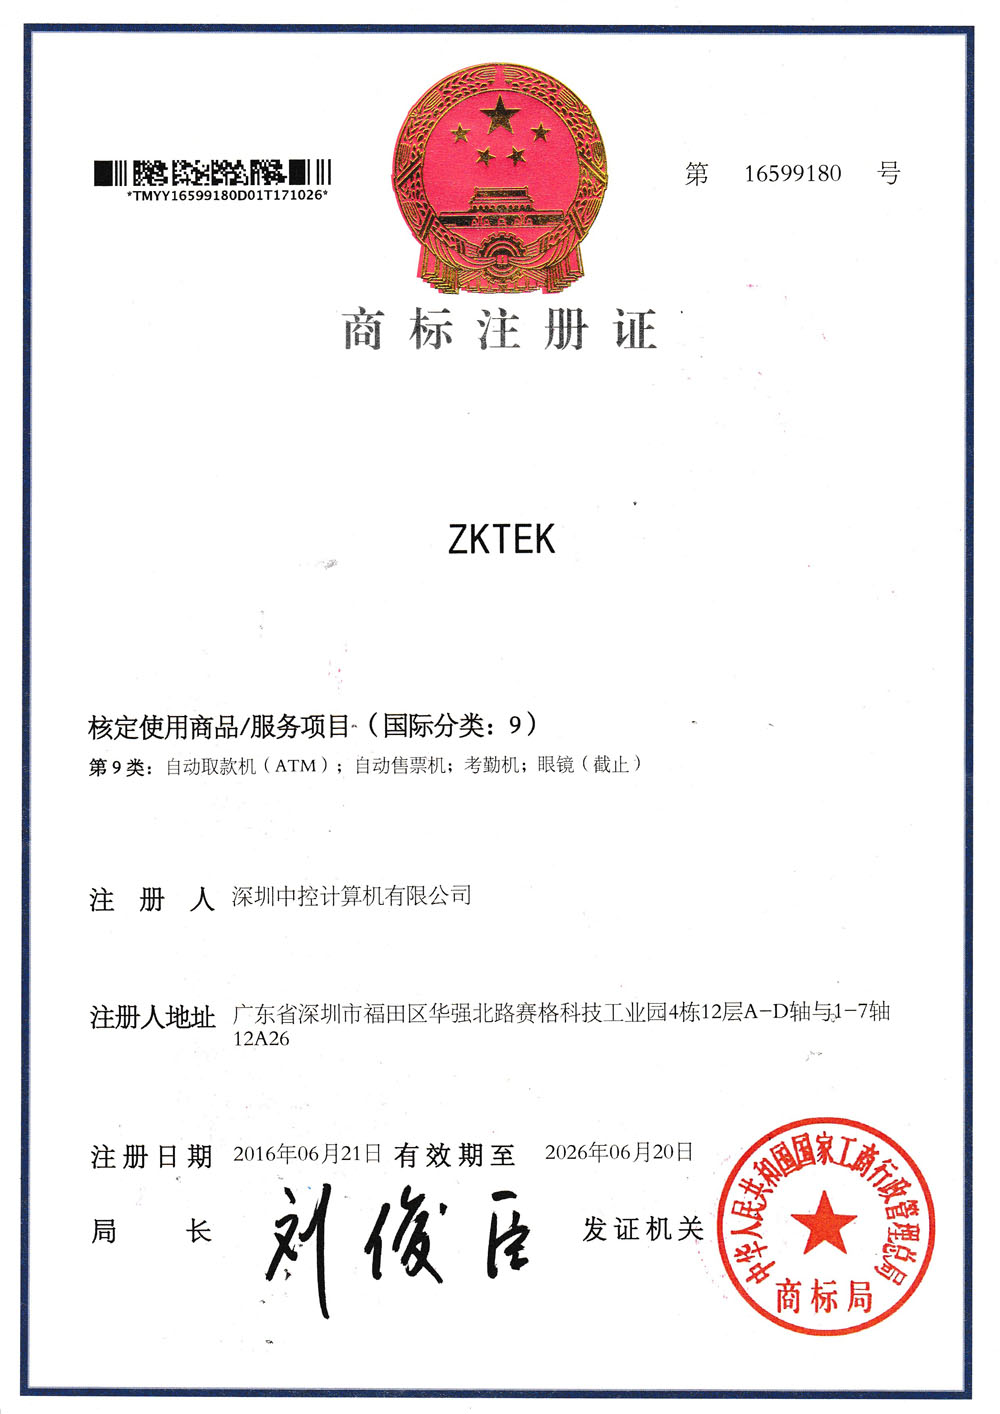 Shenzhen Zhongkong Computers Co Ltd has the registration certificate for the ZKTEK trademark